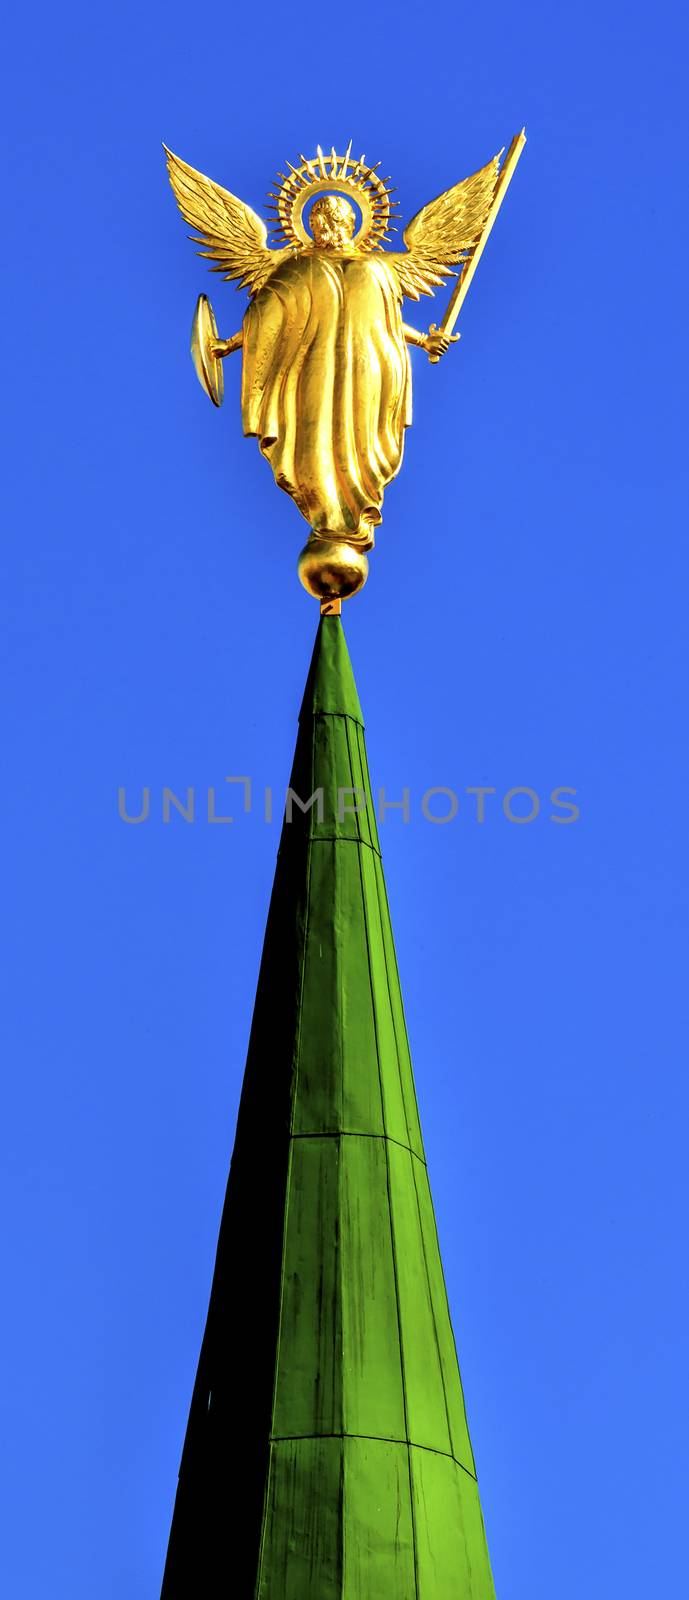 Archangel Michael Statue Saint Sophia Cathedral Kiev Ukraine by bill_perry